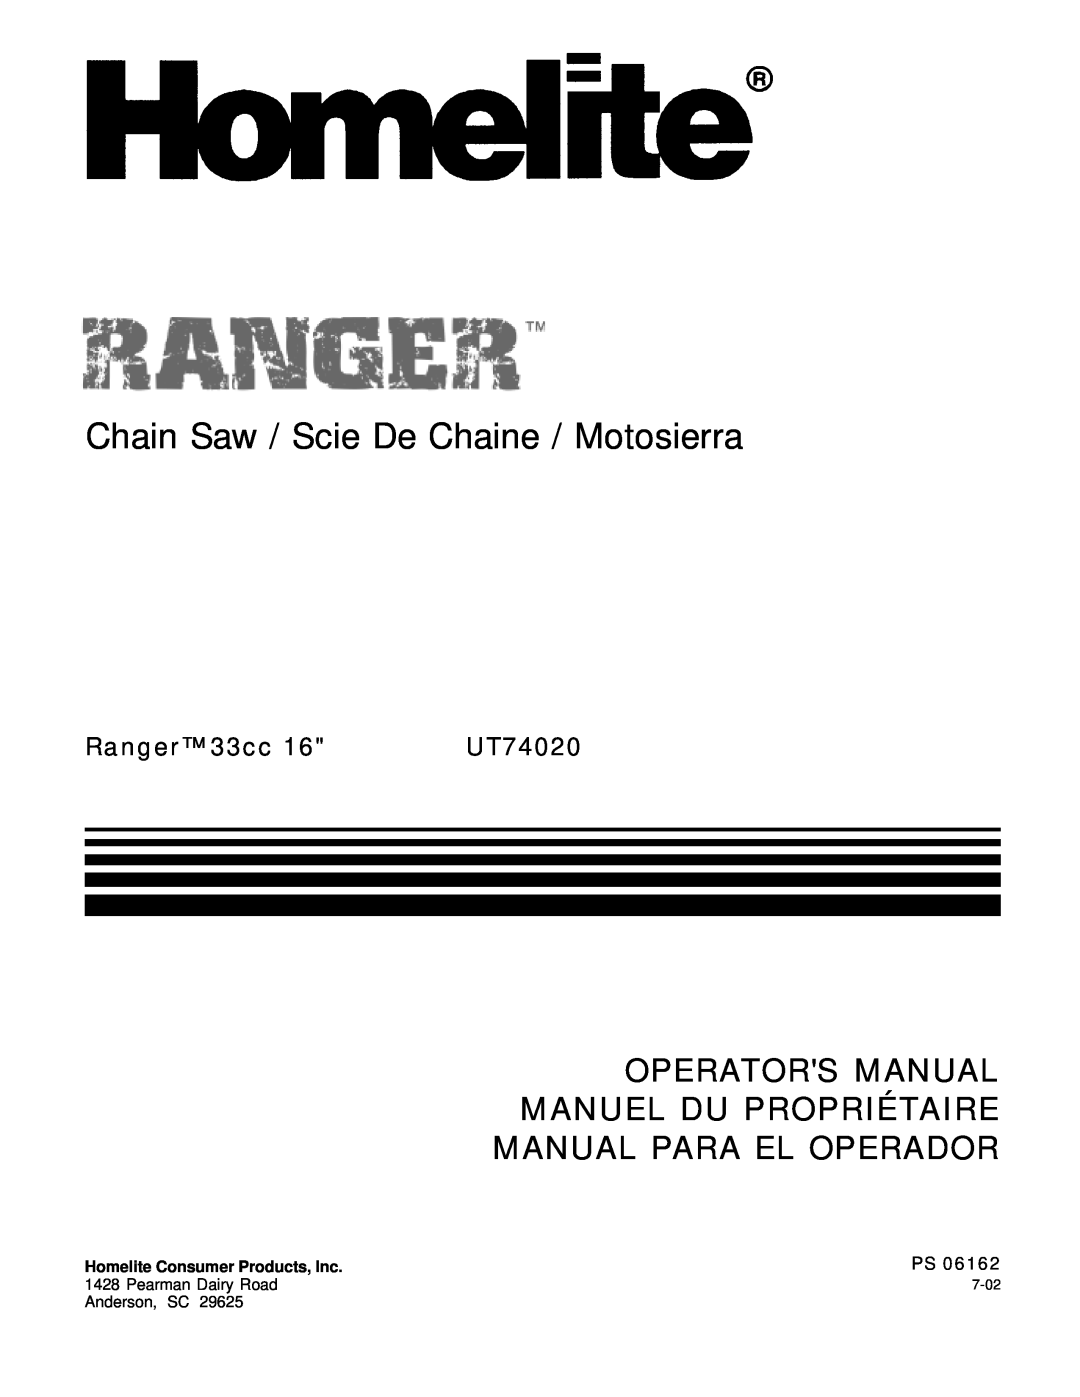 Homelite UT74020 manual Homelite Consumer Products, Inc, Chain Saw / Scie De Chaine / Motosierra, Ranger 33cc 